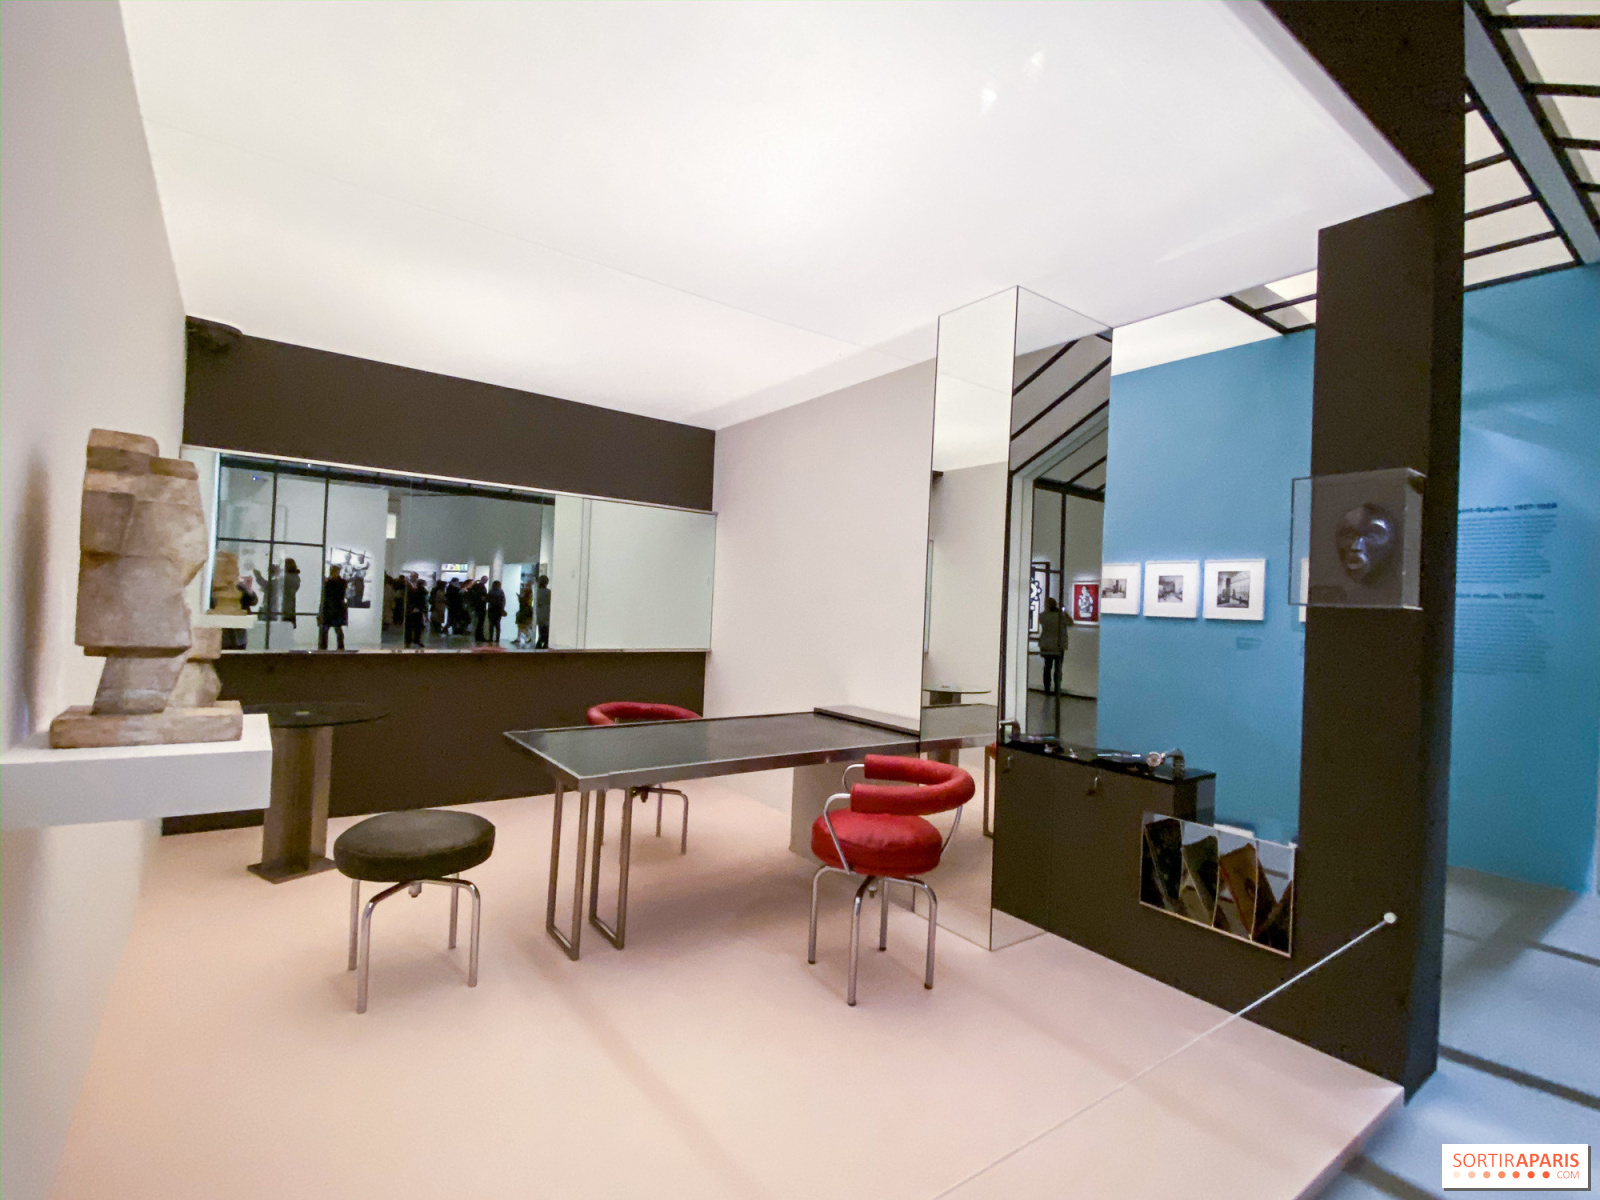 Fondation Louis Vuitton Charlotte Perriand Exhibit